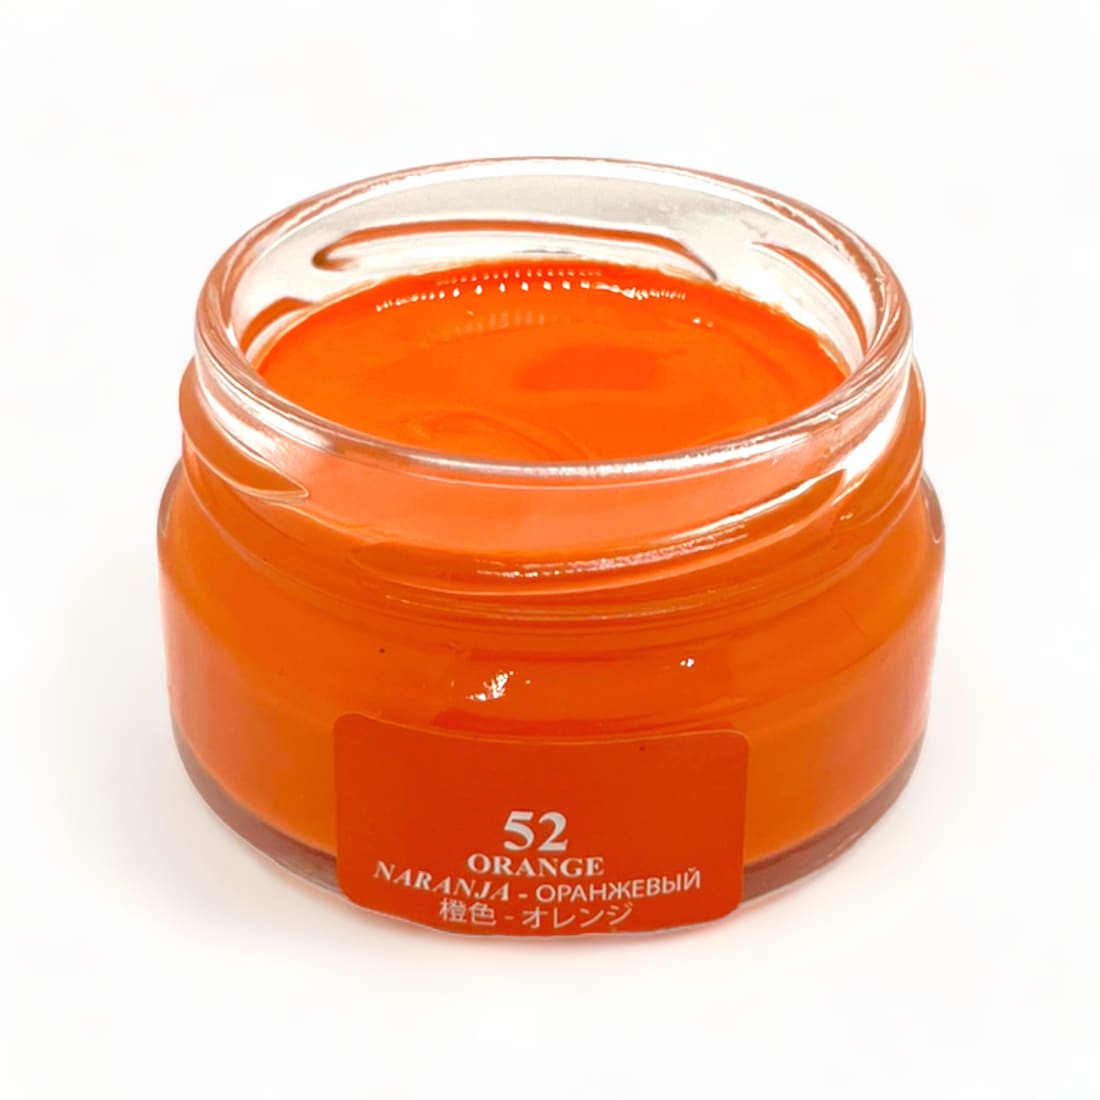 Cirage Crème Surfine Orange - Saphir - 50 ml - Accessoires